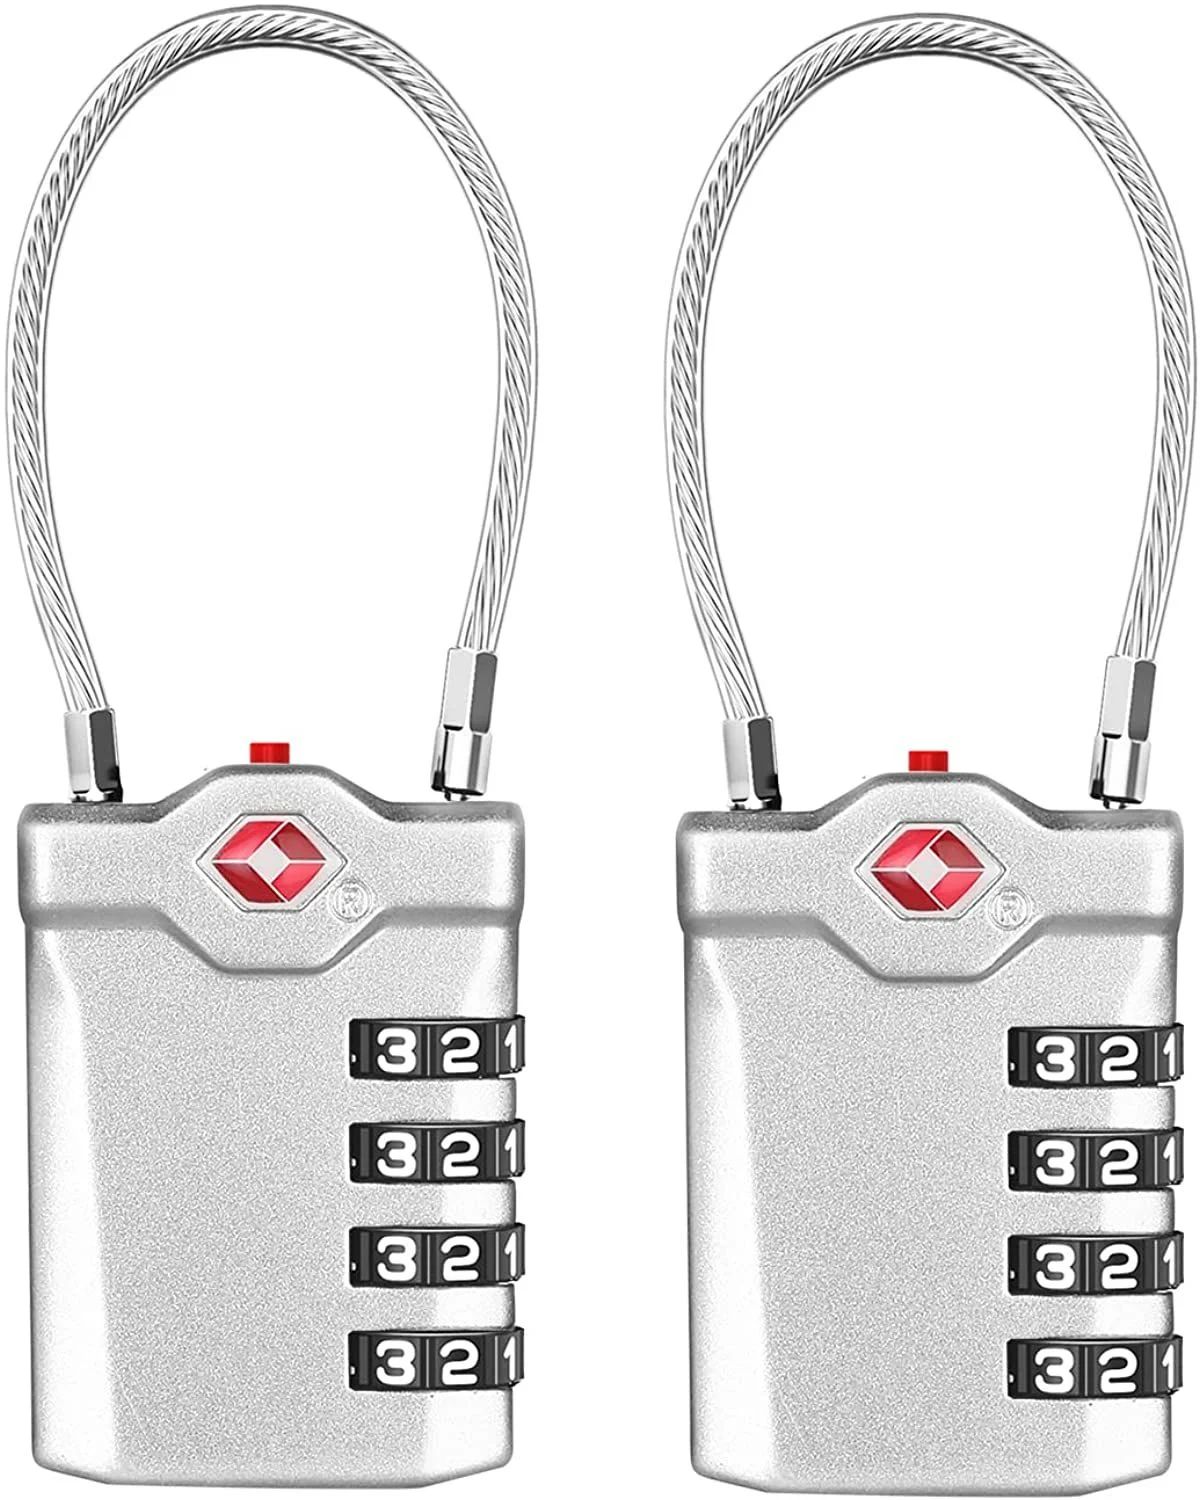 ZHEGE TSAロック 南京錠 旅行 ダイヤル式 ワイヤーロック 暗証番号 荷物、スーツケース、バックパック用